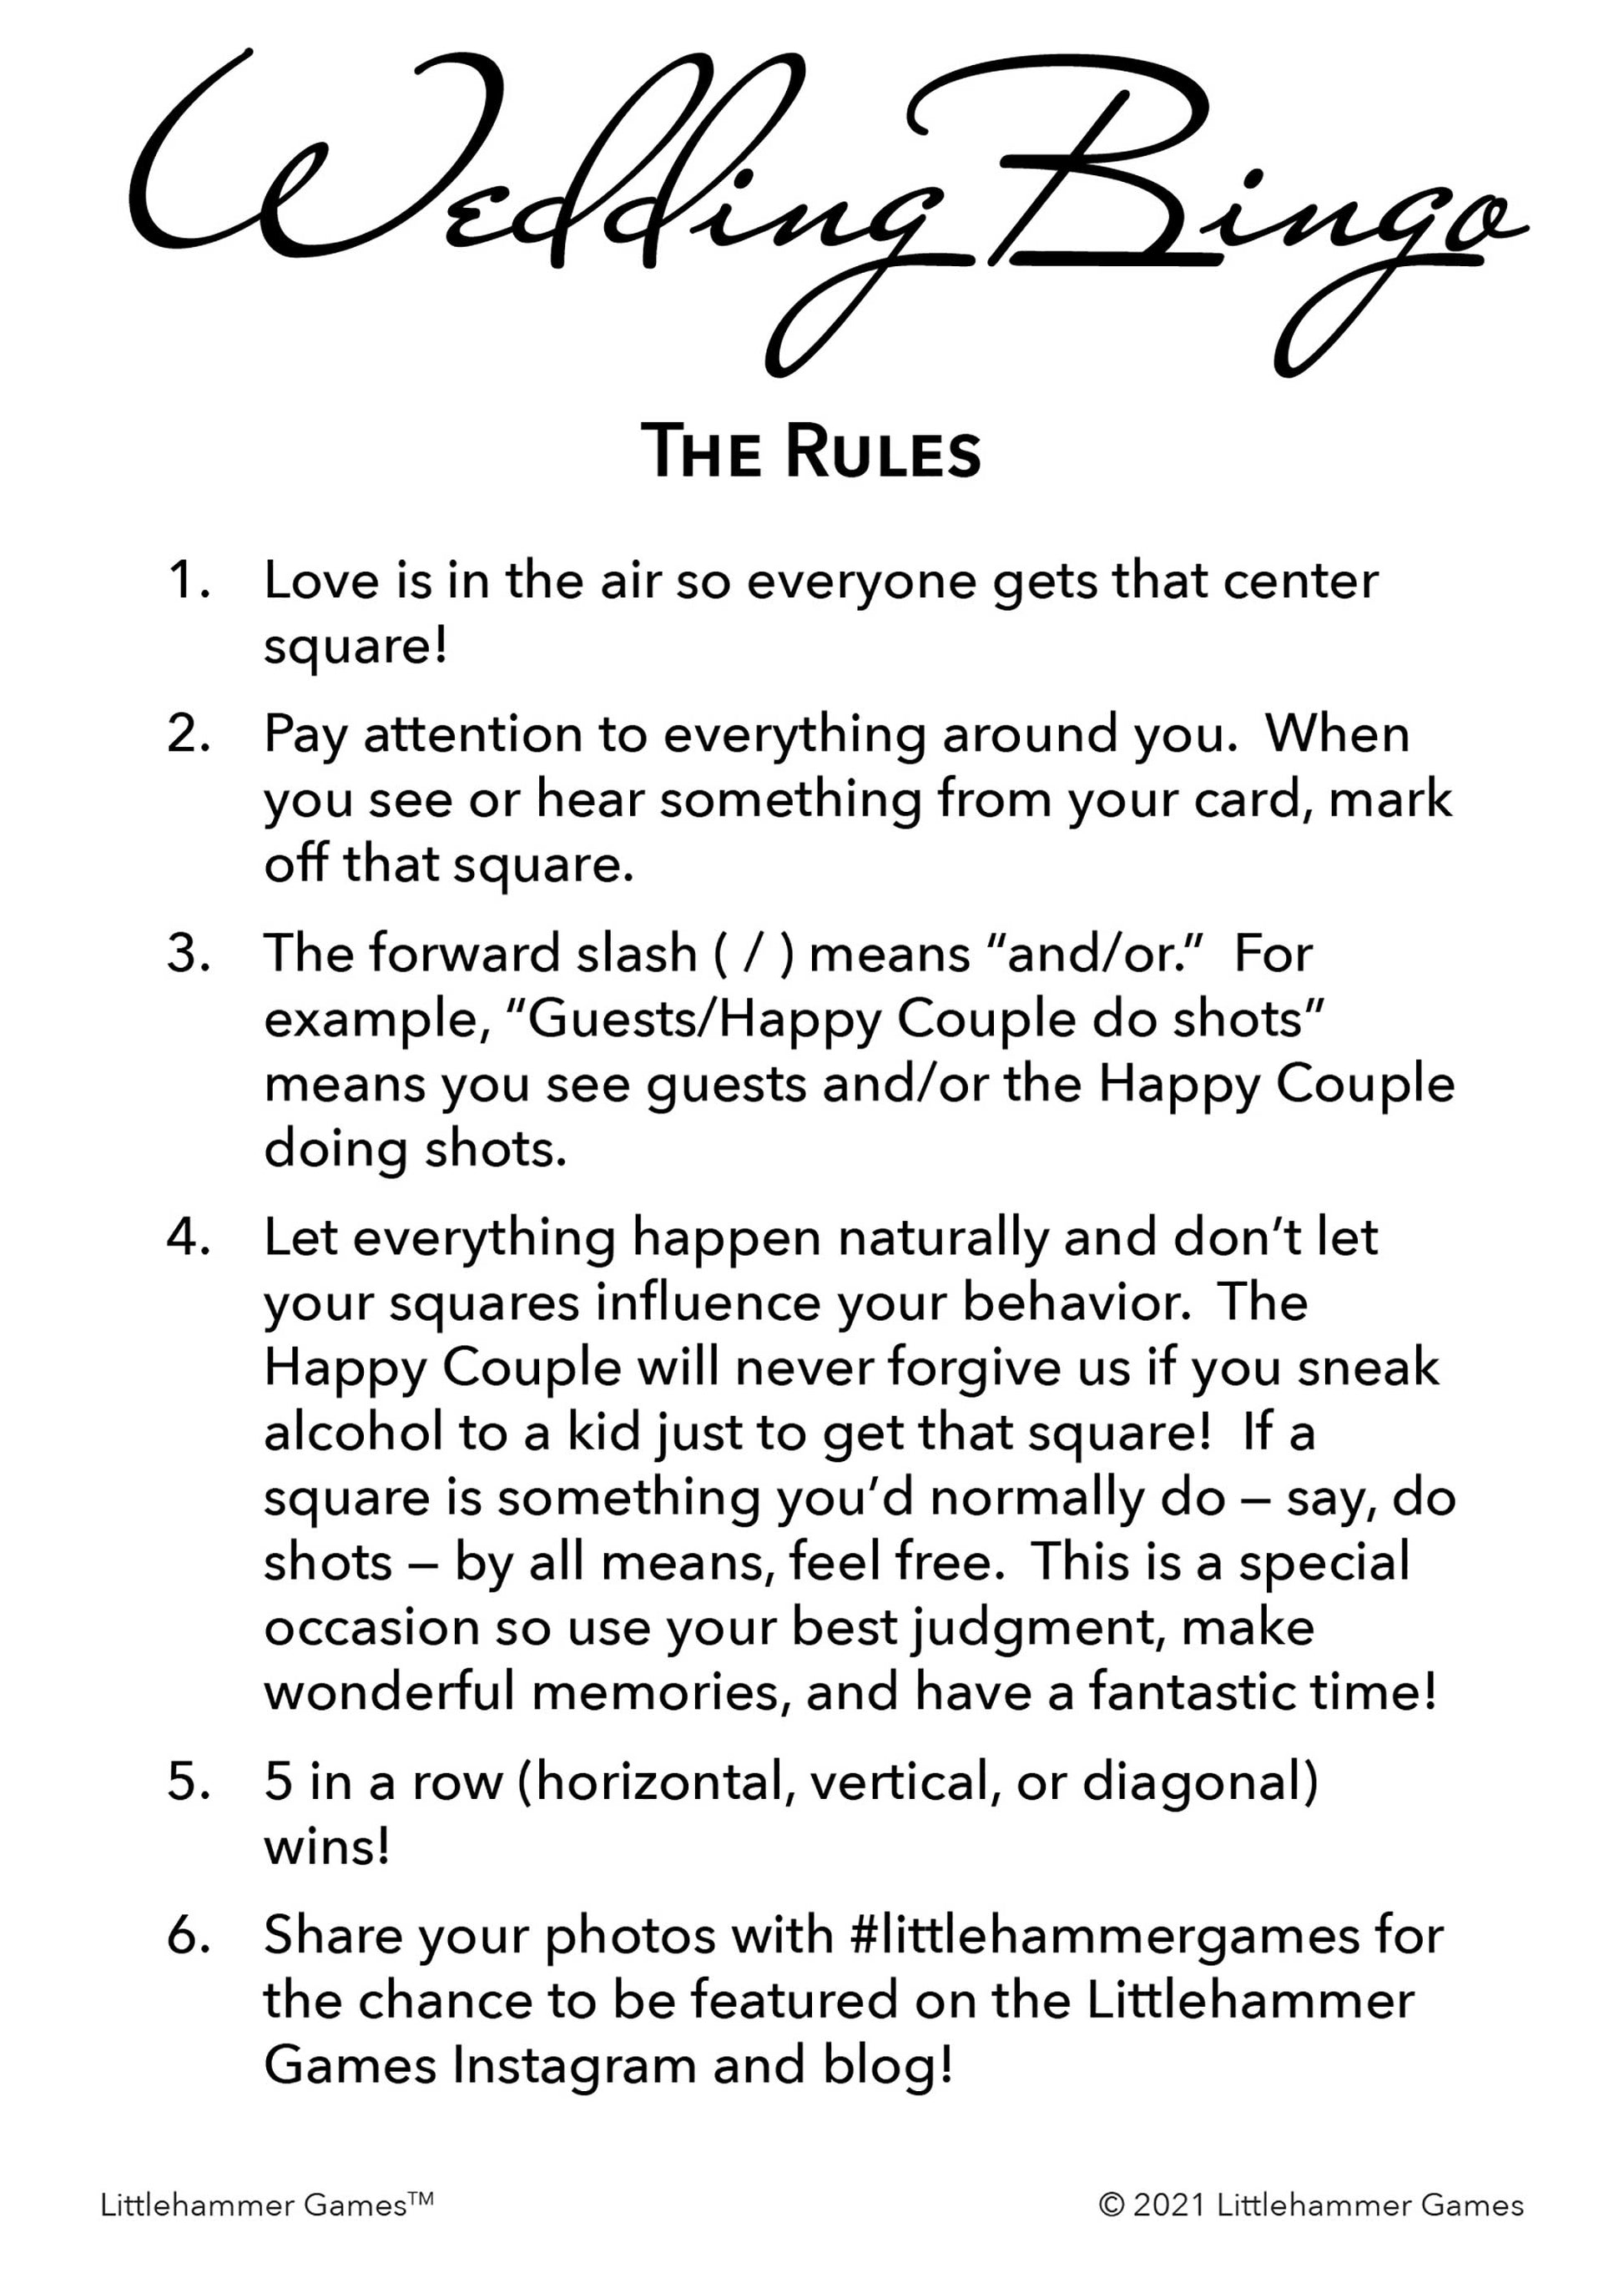 Wedding Bingo rules card on a minimalist black and white background